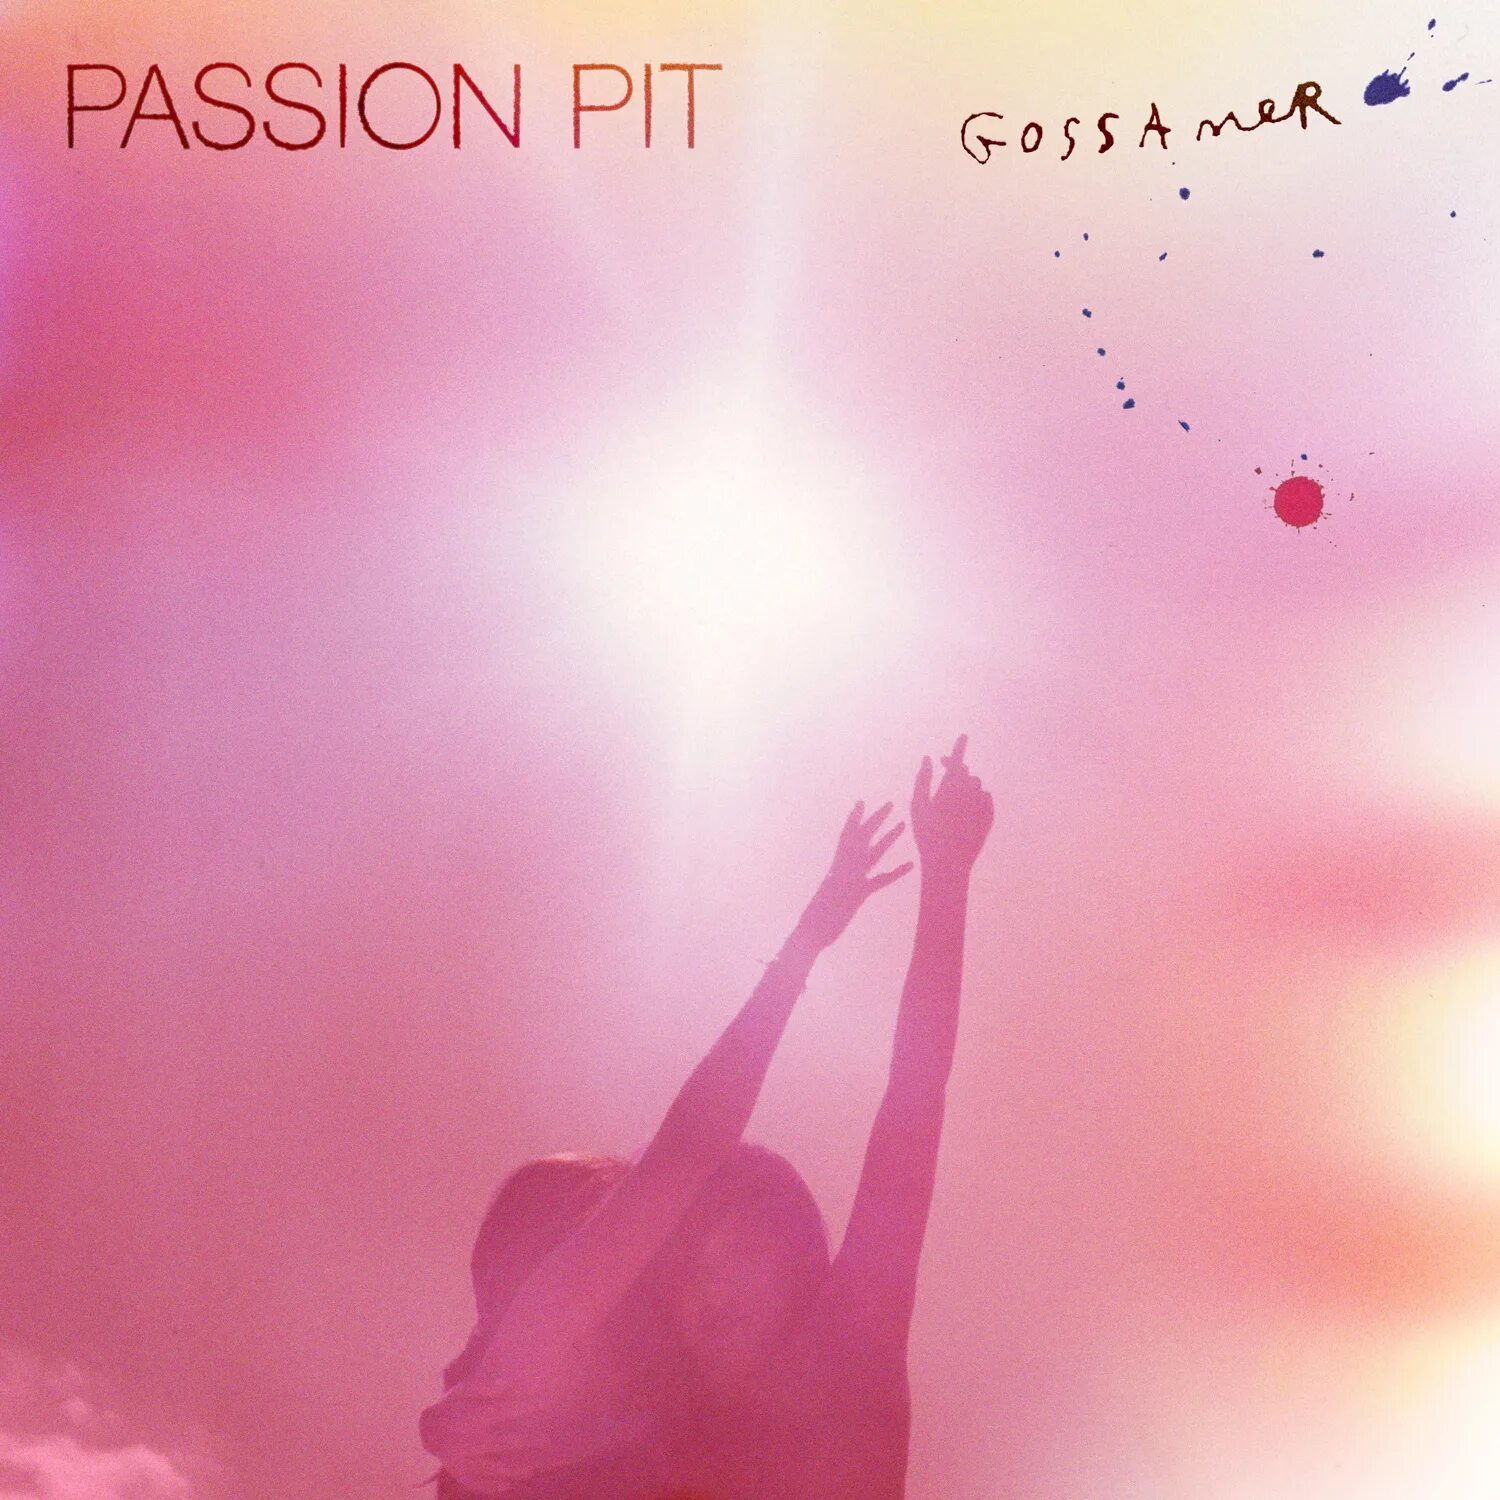 Gossamer melogram. Gossamer певец. Passion Pit "Gossamer (CD)". Passion pit